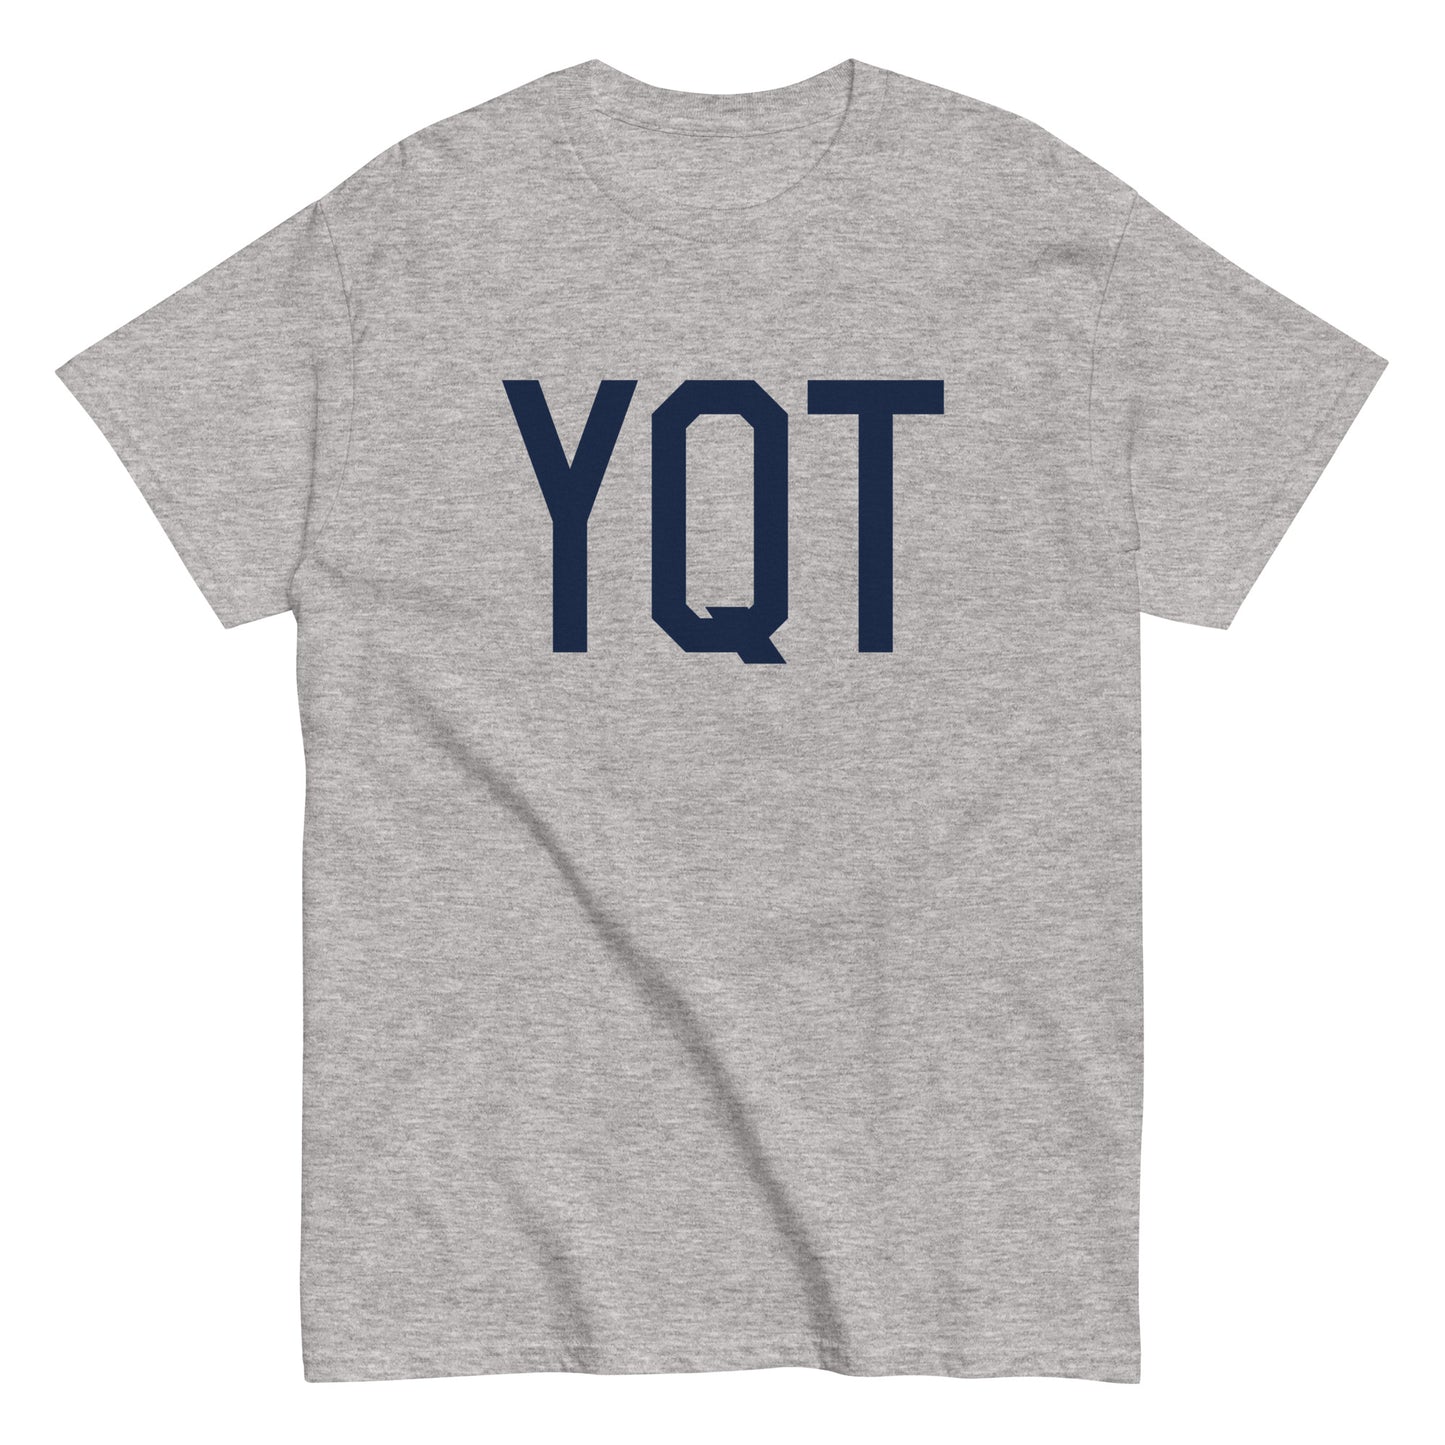 Aviation-Theme Men's T-Shirt - Navy Blue Graphic • YQT Thunder Bay • YHM Designs - Image 02